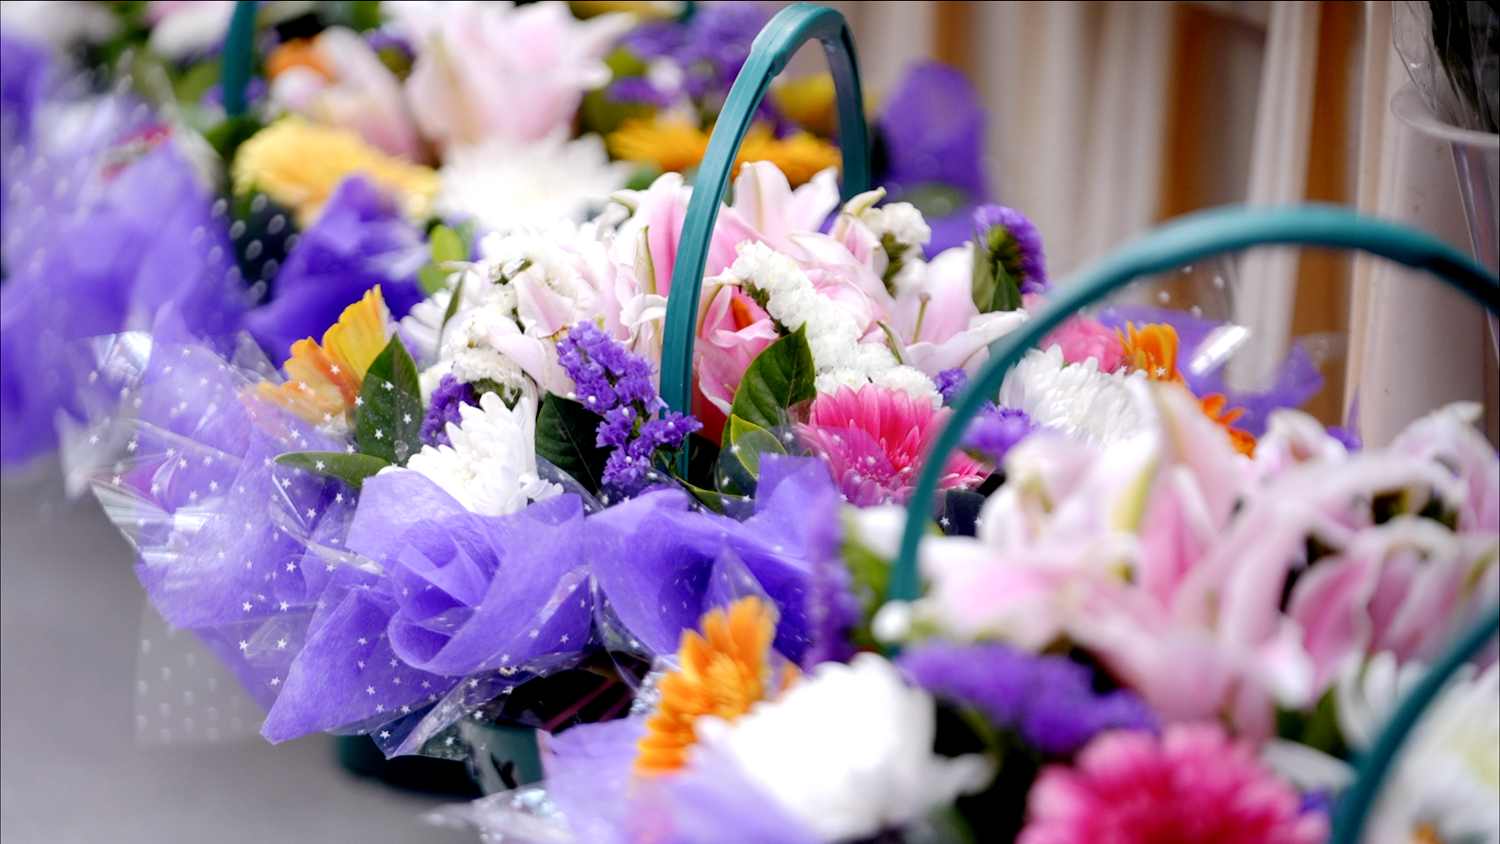 Flower baskets for sale /CGTN